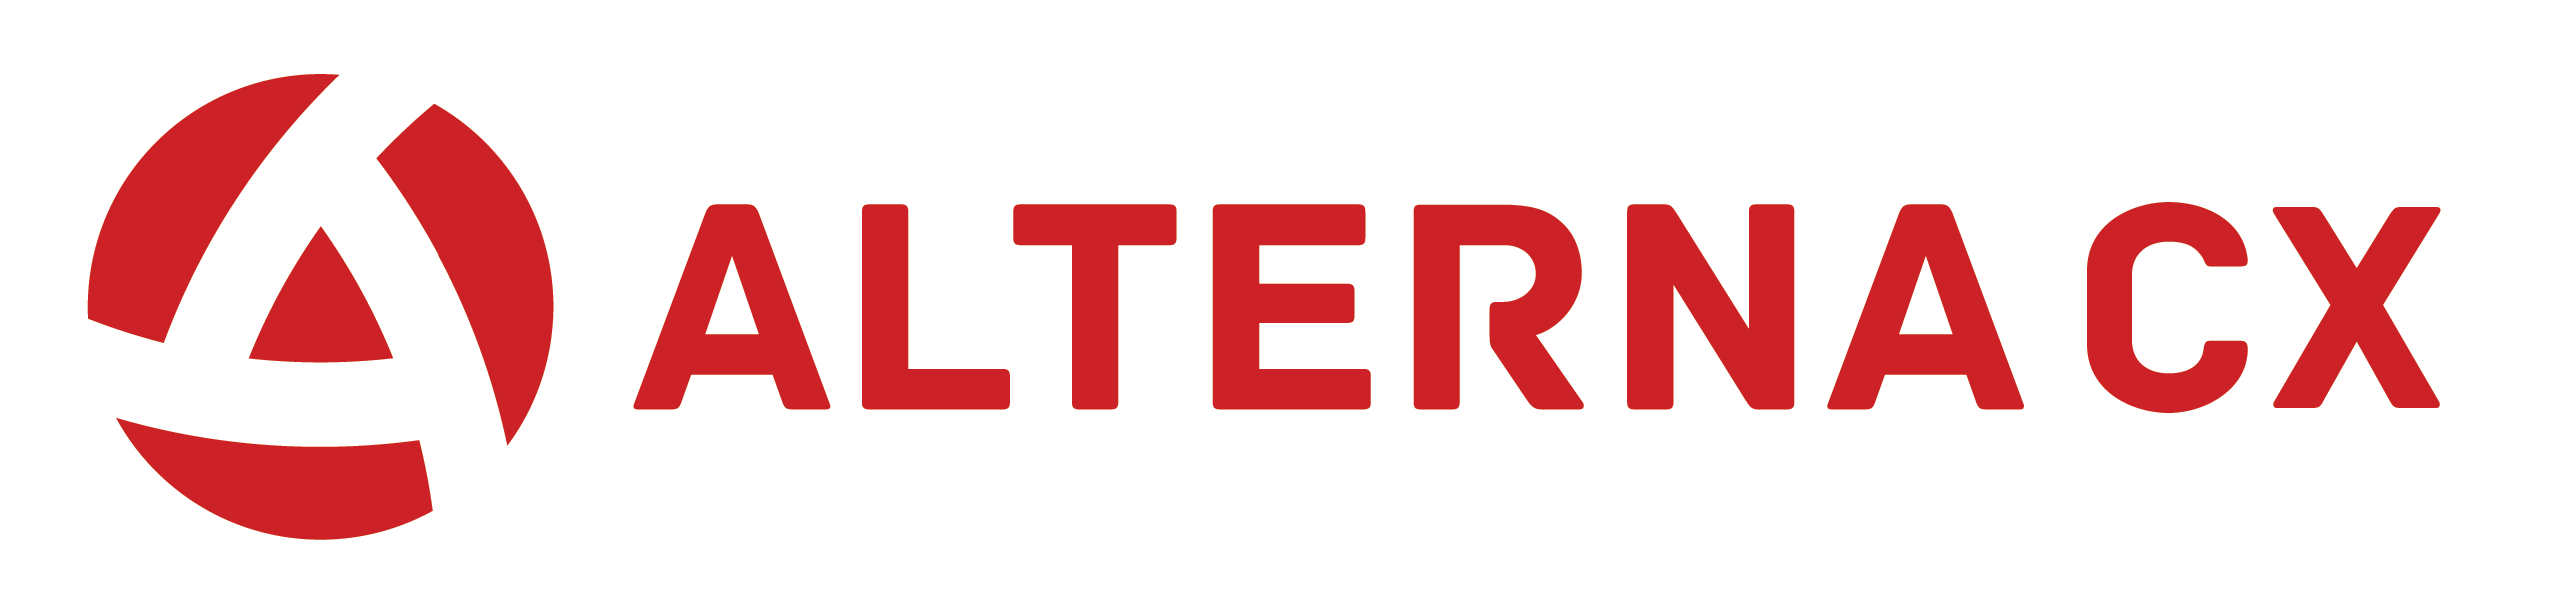 Alterna Logo - AlternaCX - Customer Experience Management